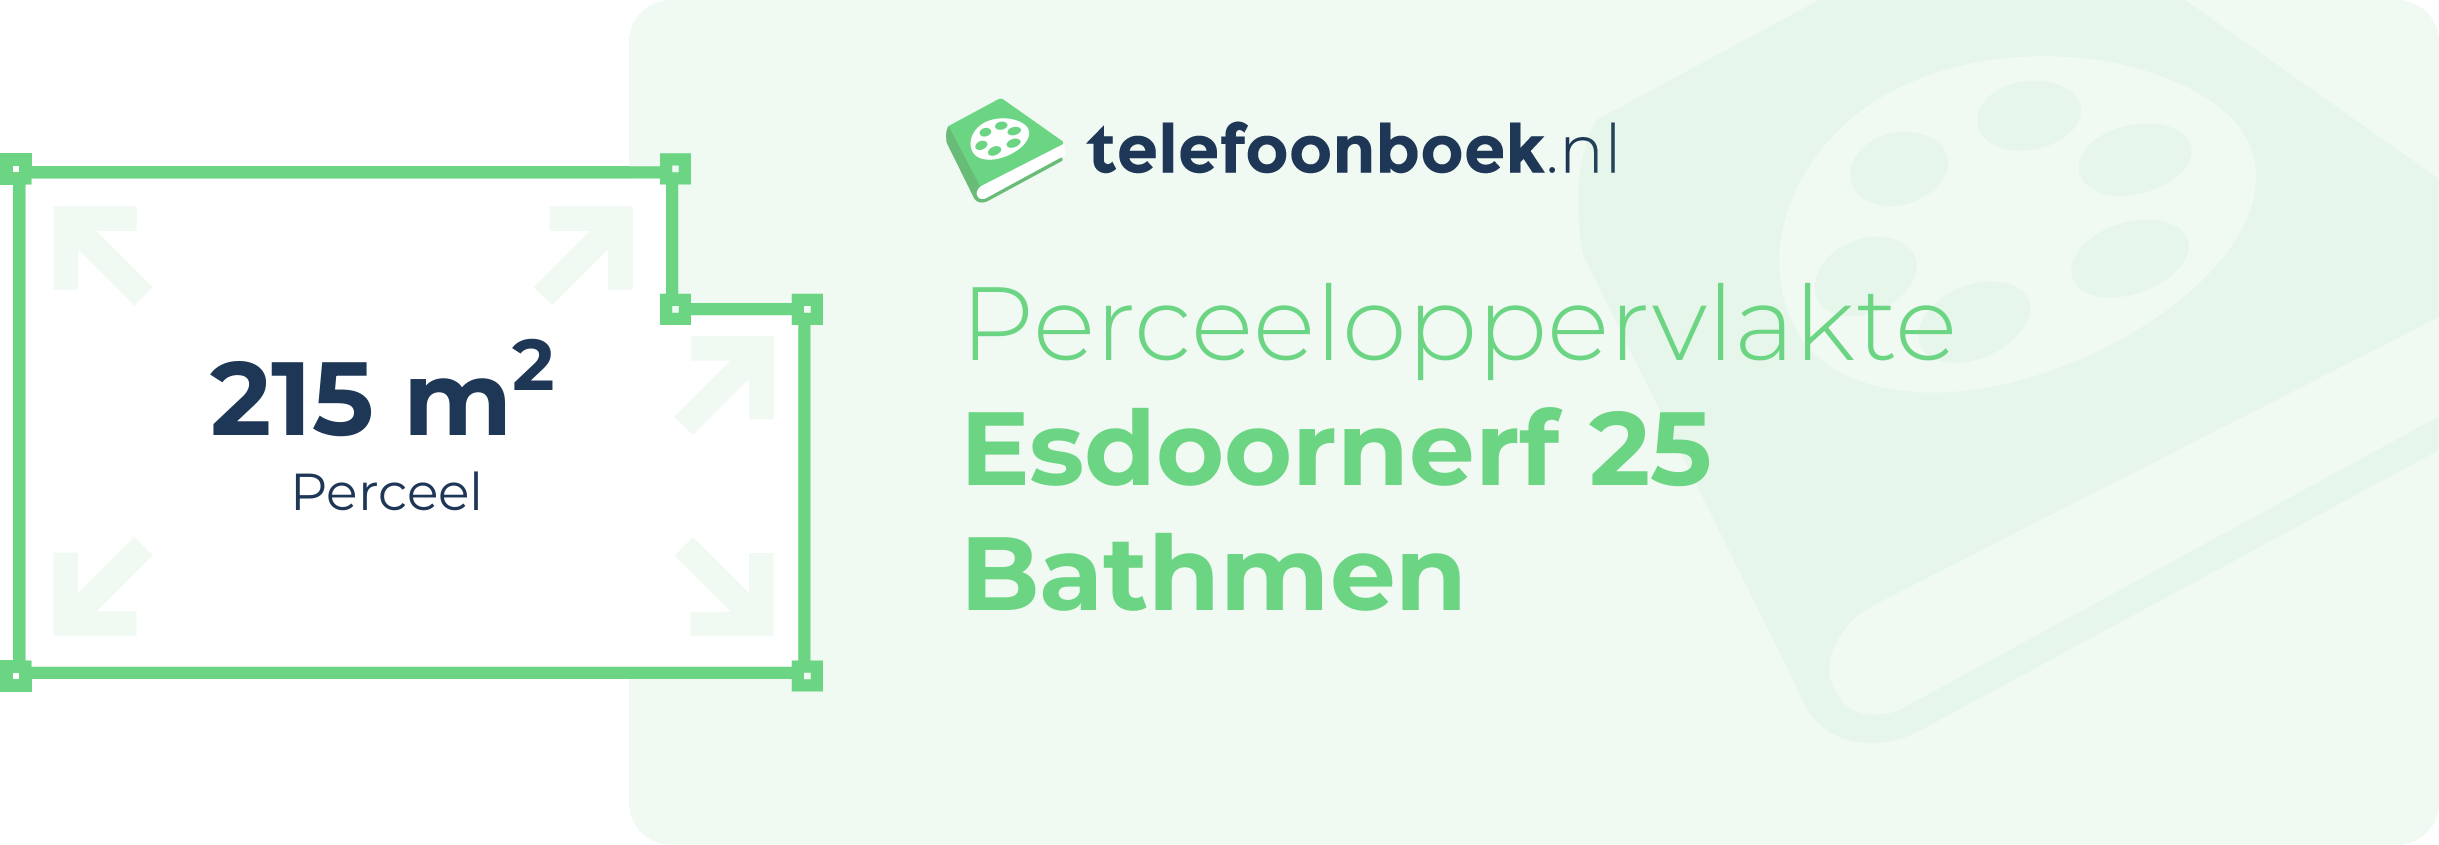 Perceeloppervlakte Esdoornerf 25 Bathmen